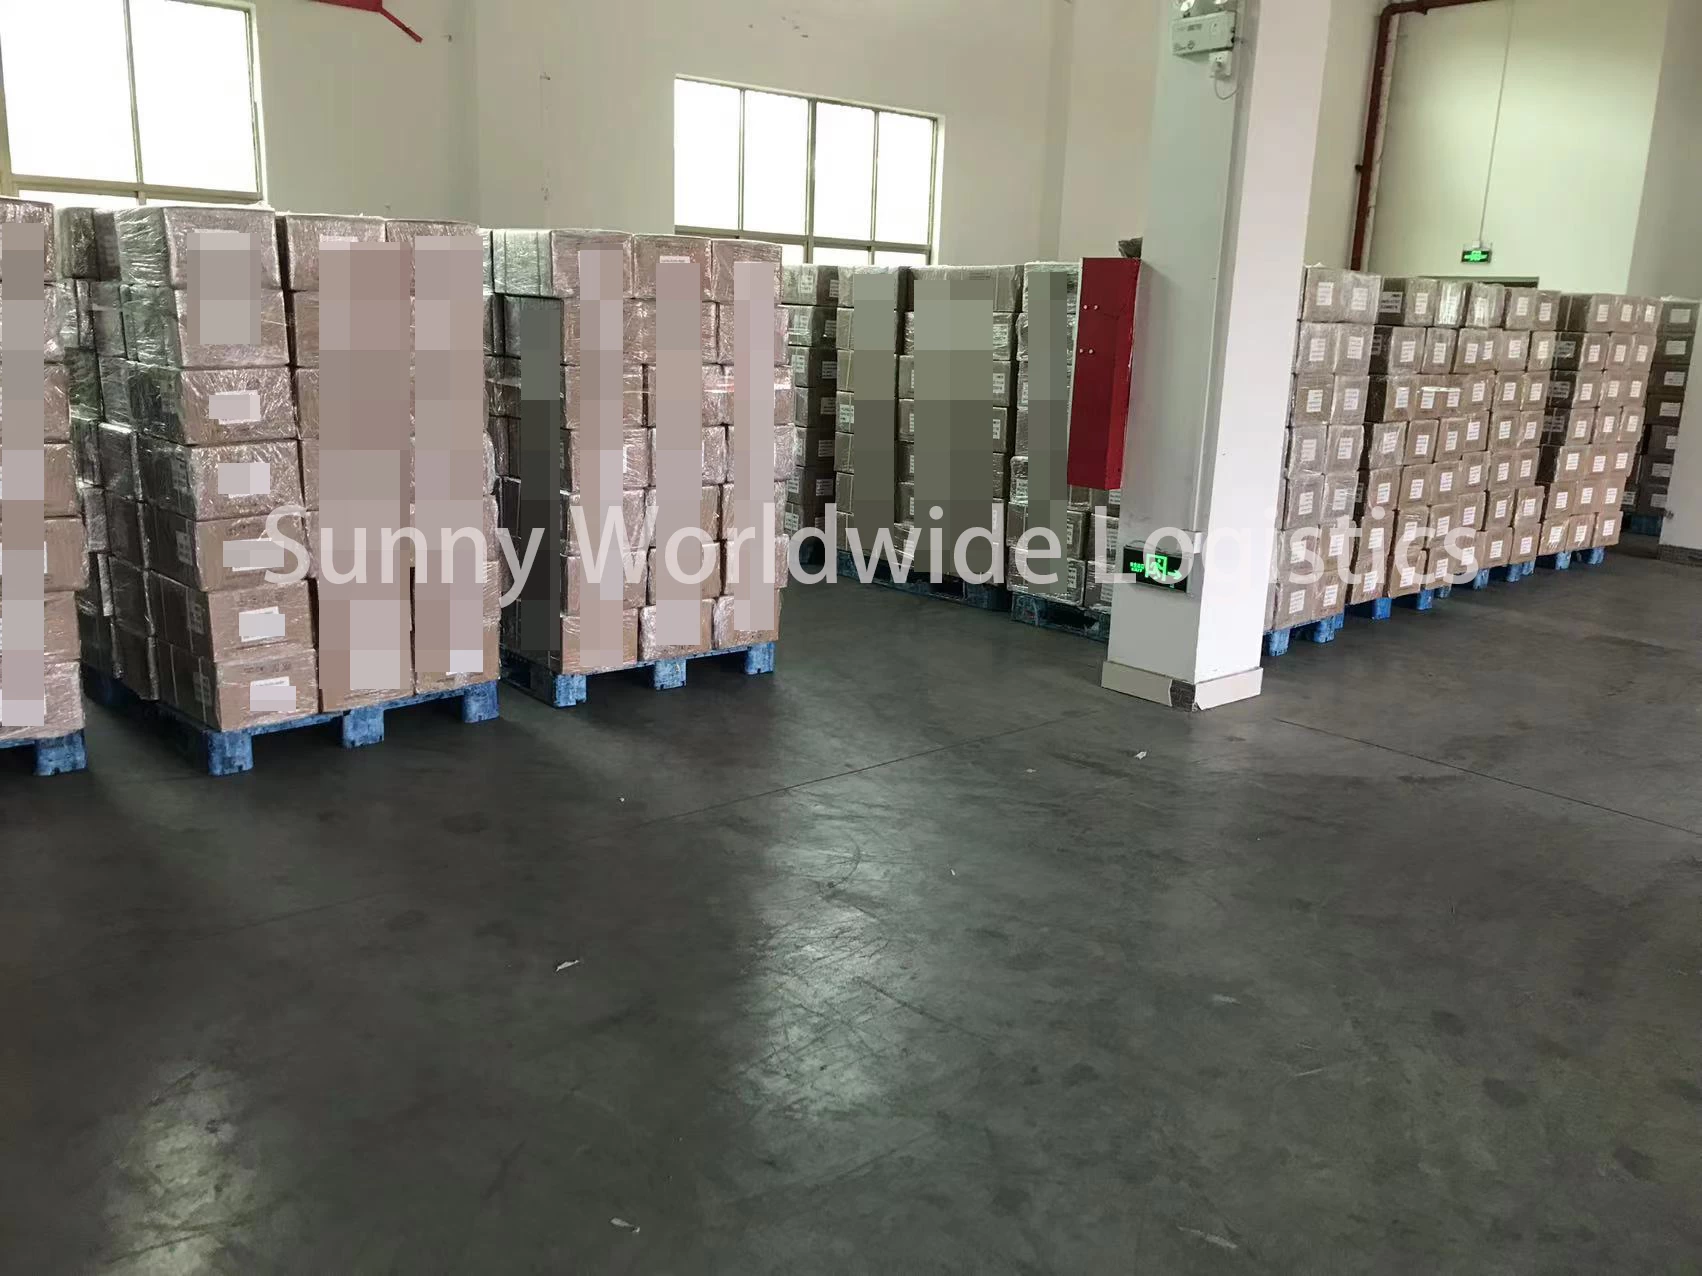 Sea freight mula sa Guangzhou Shenzhen pick up mula sa factory cargo service papuntang Pilipinas